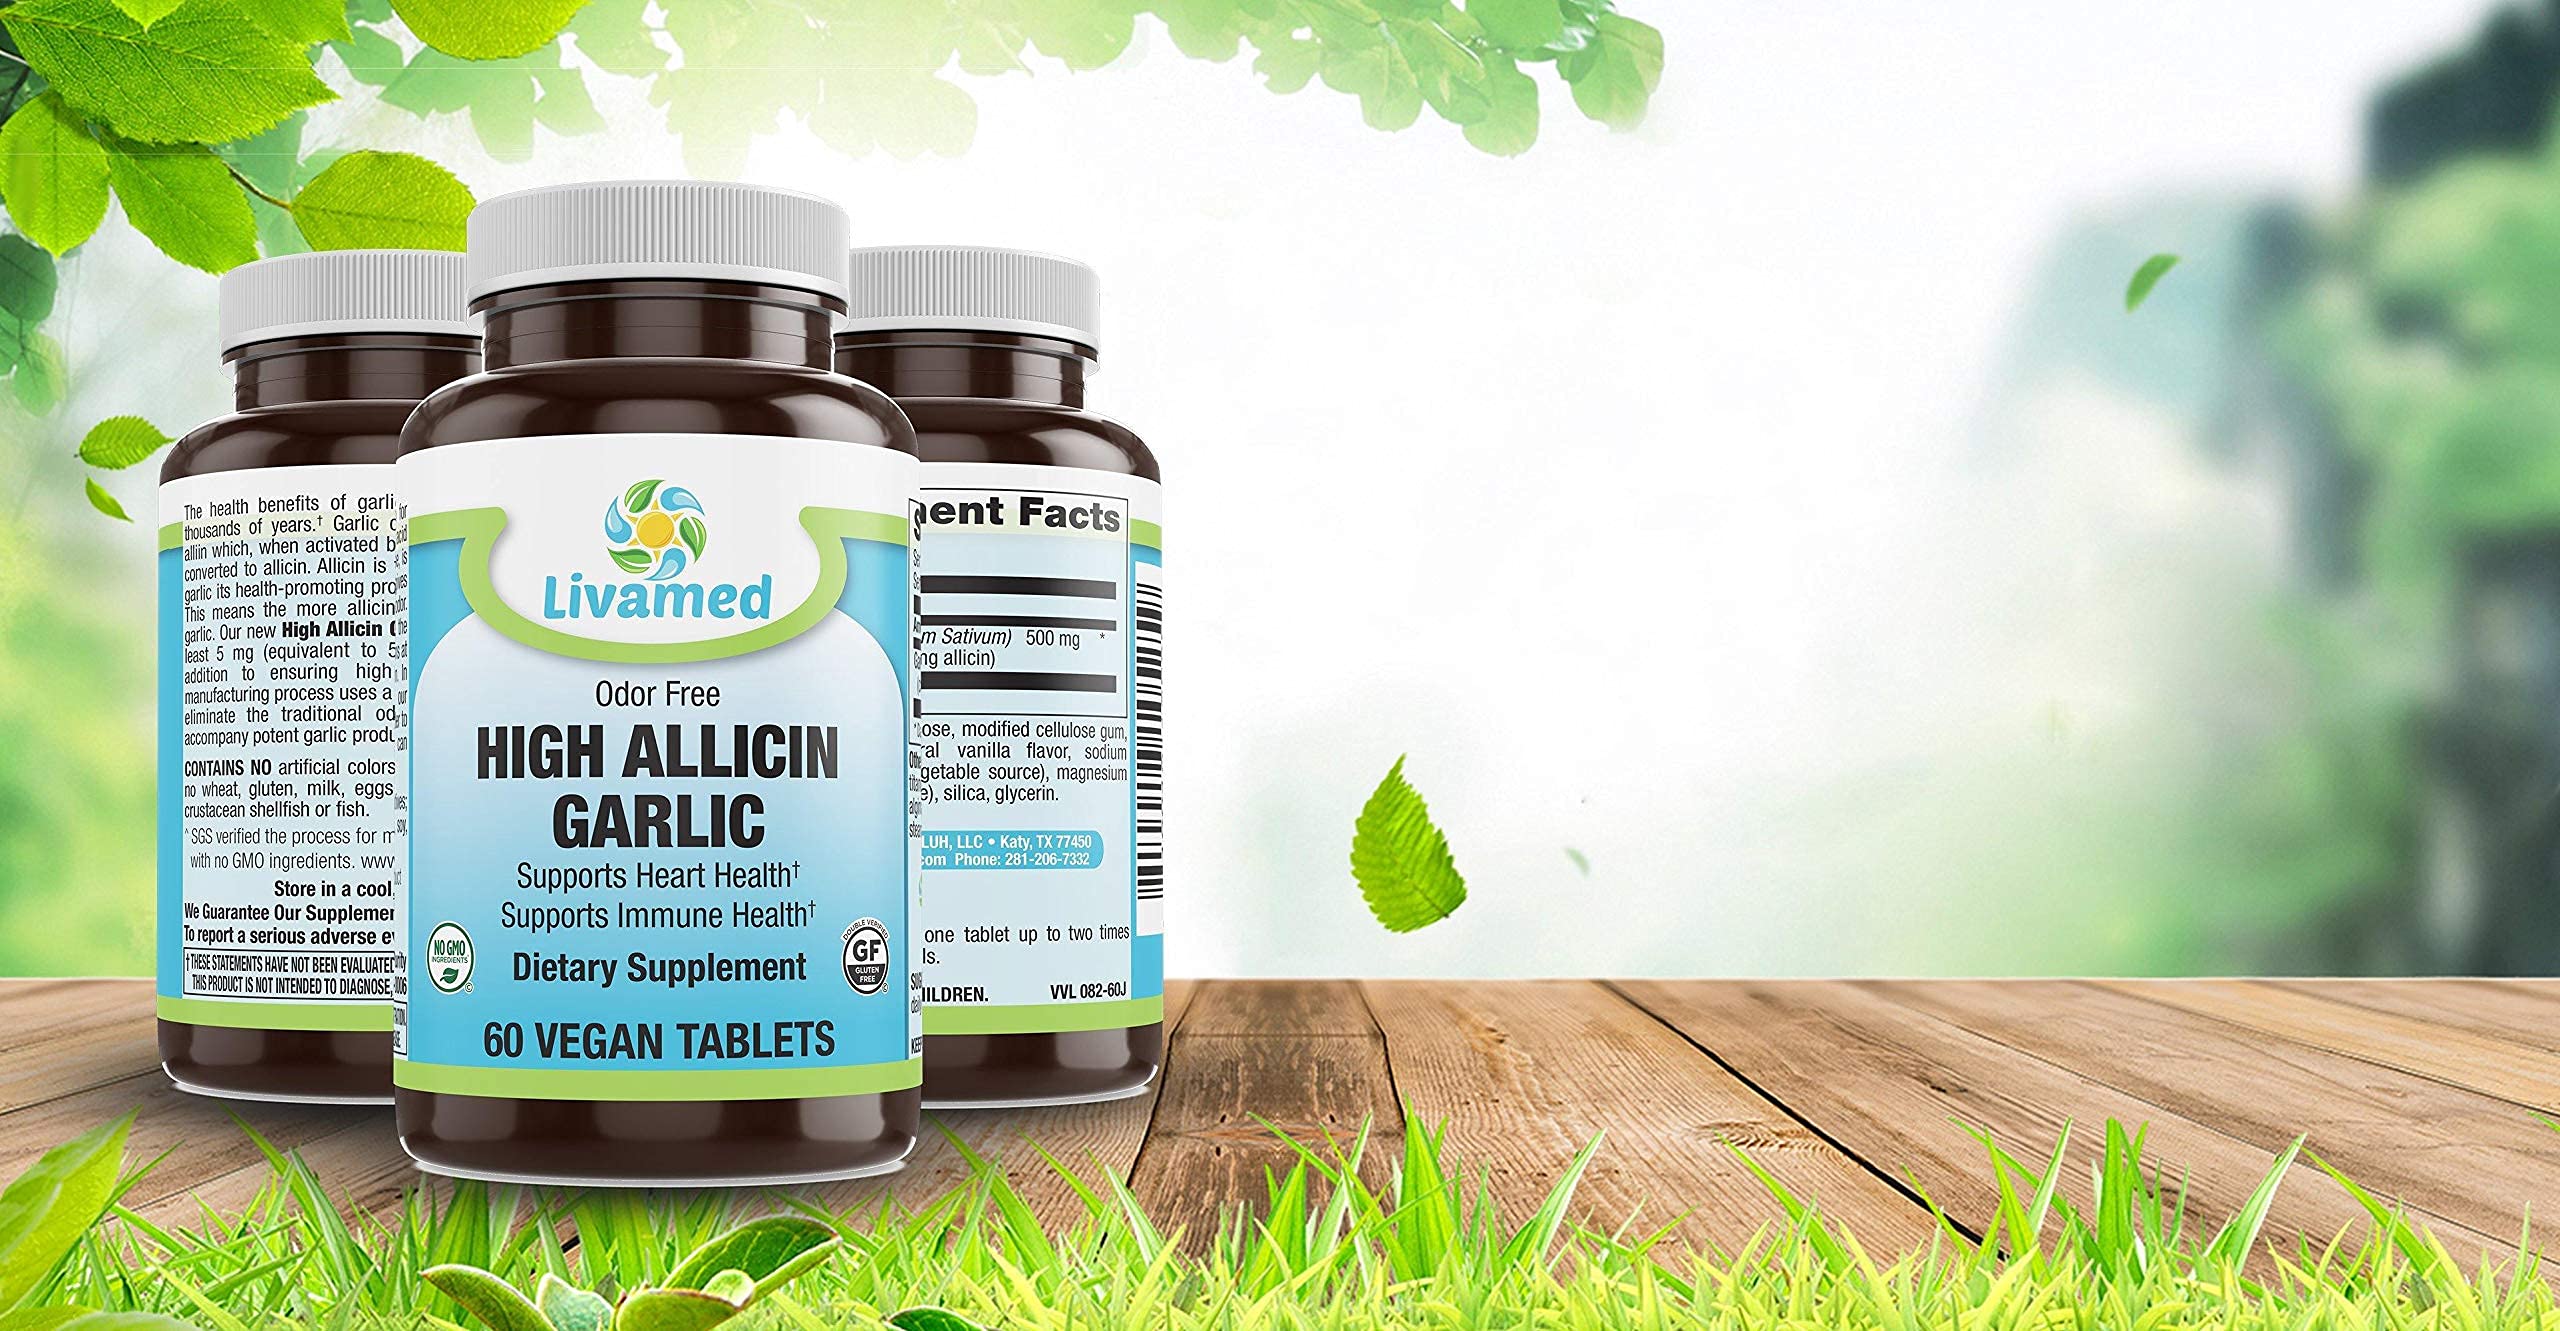 Livamed - High Allicin Garlic 500 mg Odor Free Veg Tabs 60 Count